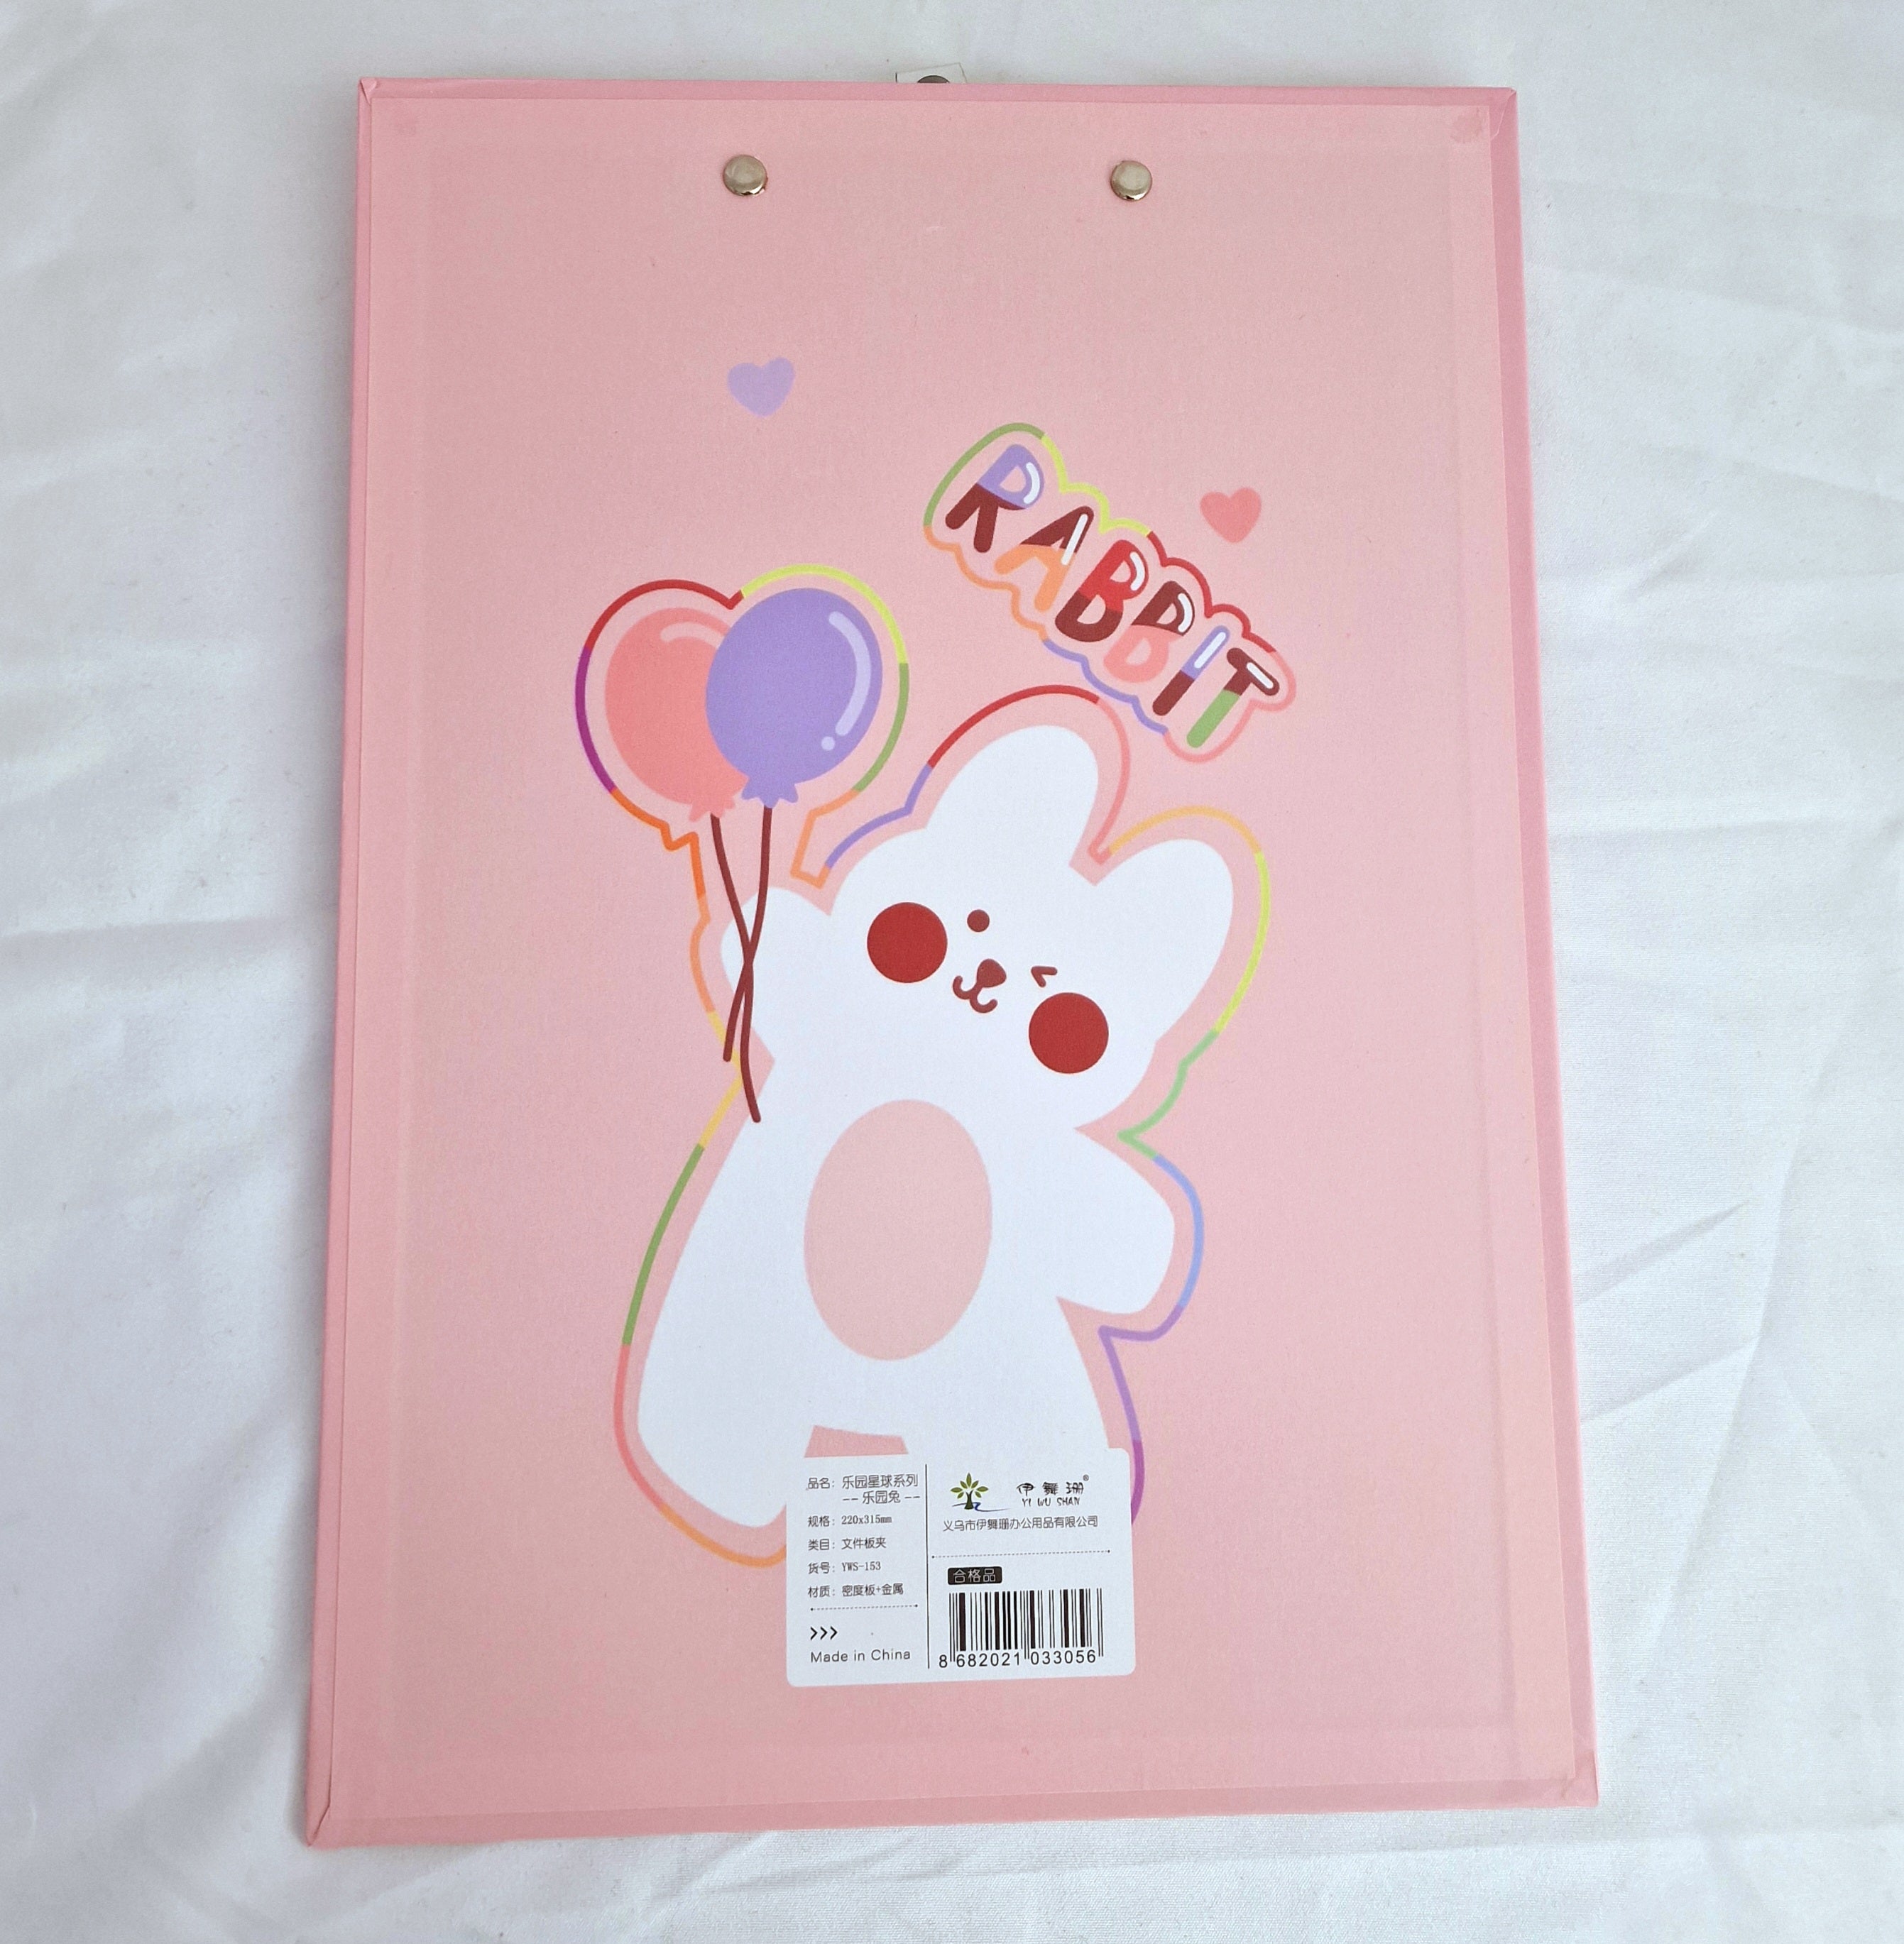 MajorCrafts Pink 'Balloon' Rabbit Printed Kawaii themed Novelty A4 Clipboard CB09